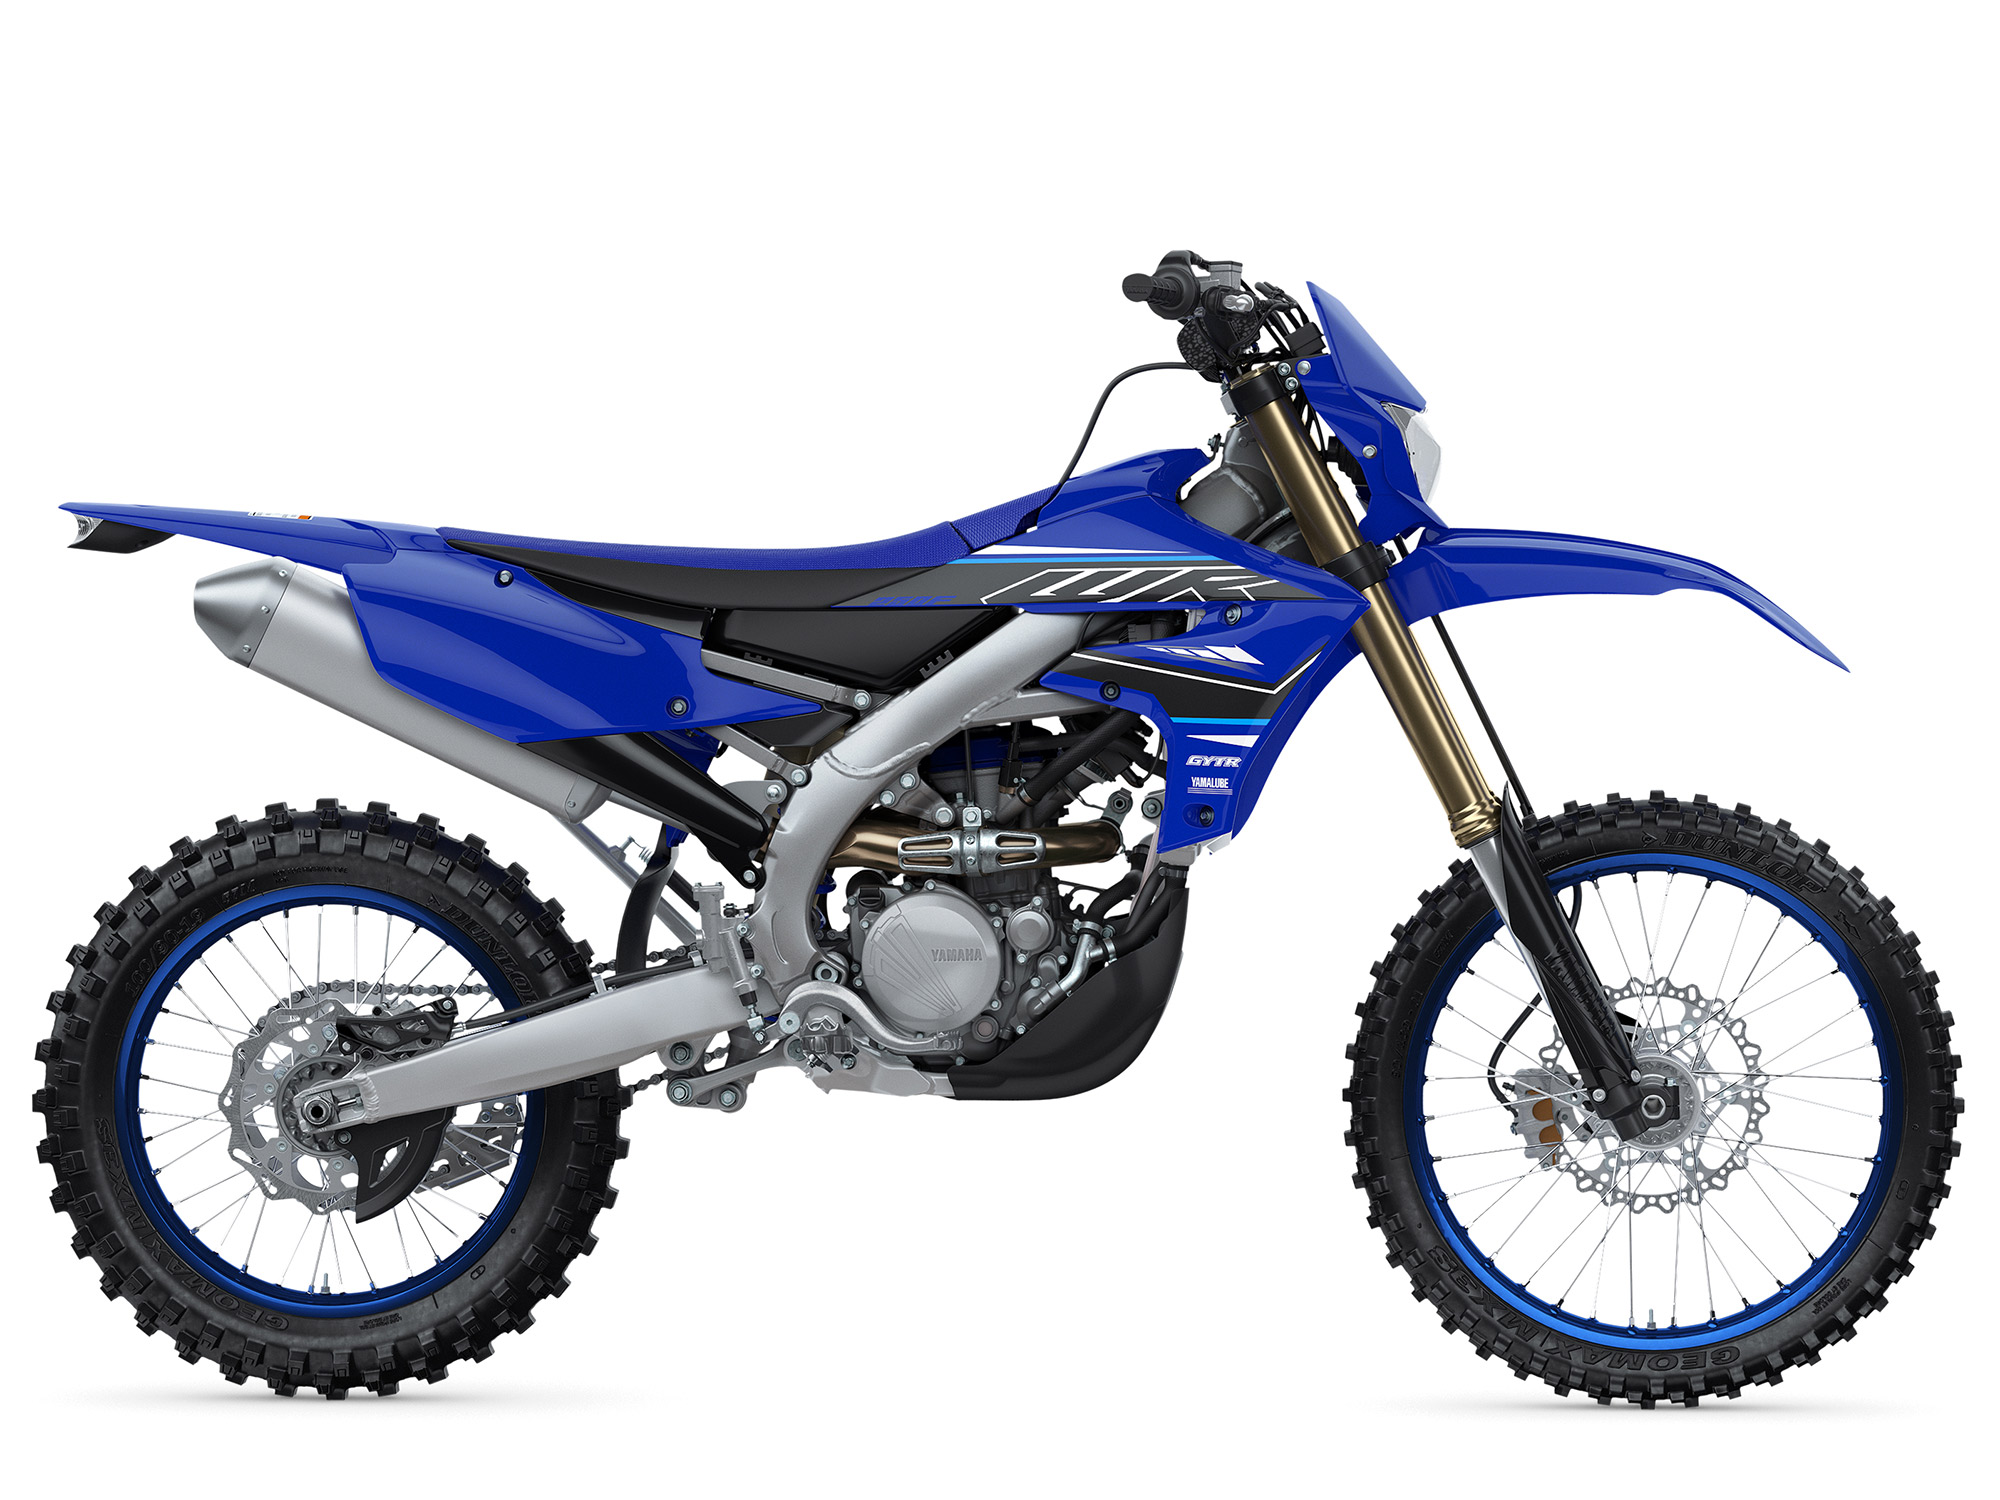 No autorizado salario Sensación 2021 Yamaha WR250F Buyer's Guide: Specs, Photos, Price | Cycle World